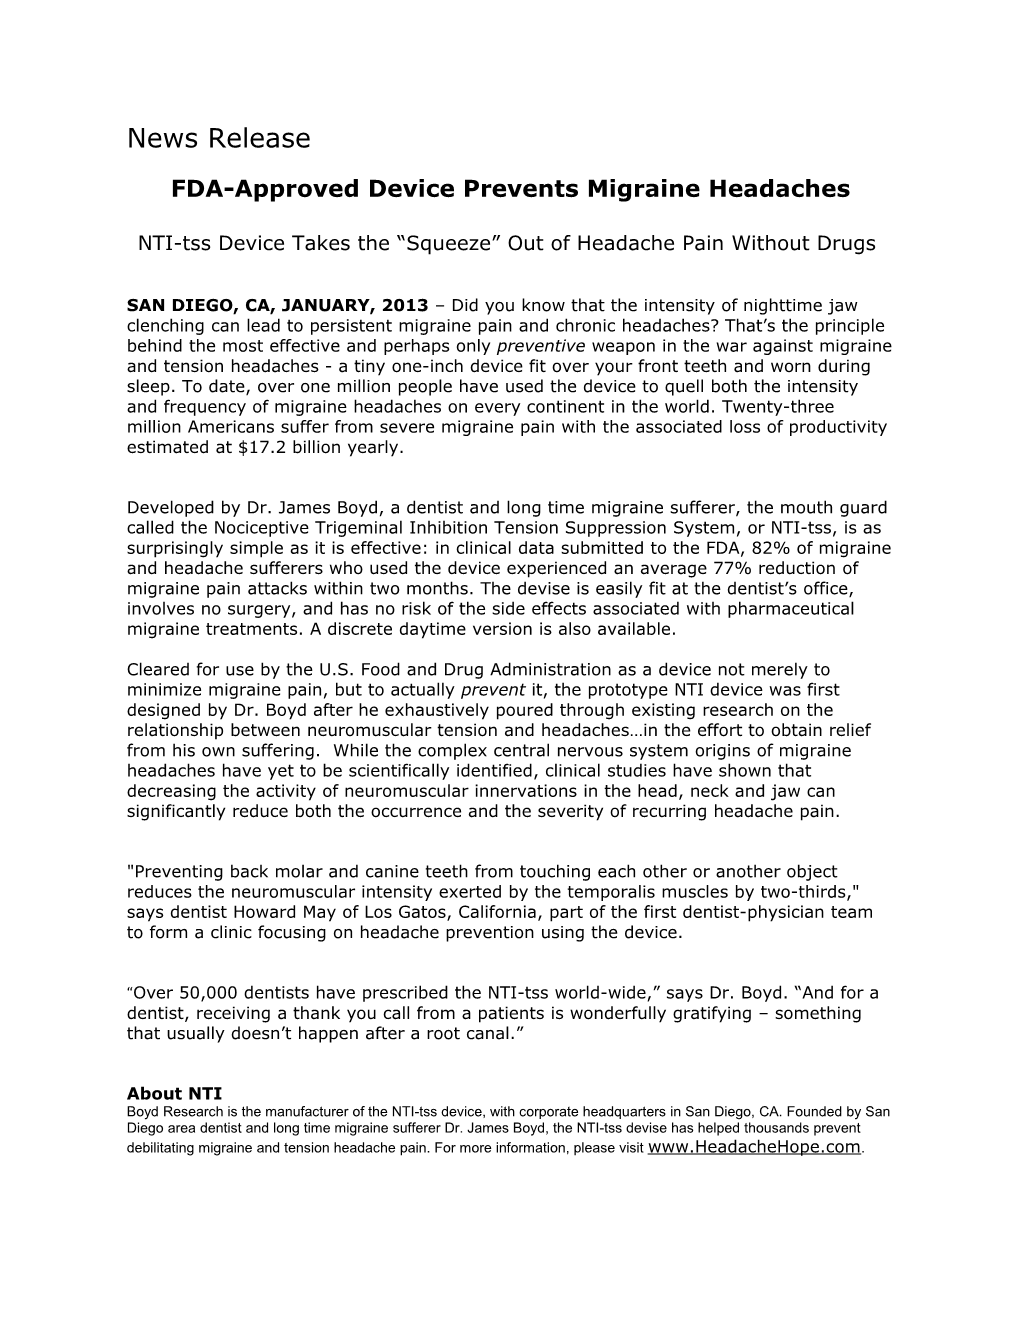 FDA-Approved Device Prevents Migraine Headaches